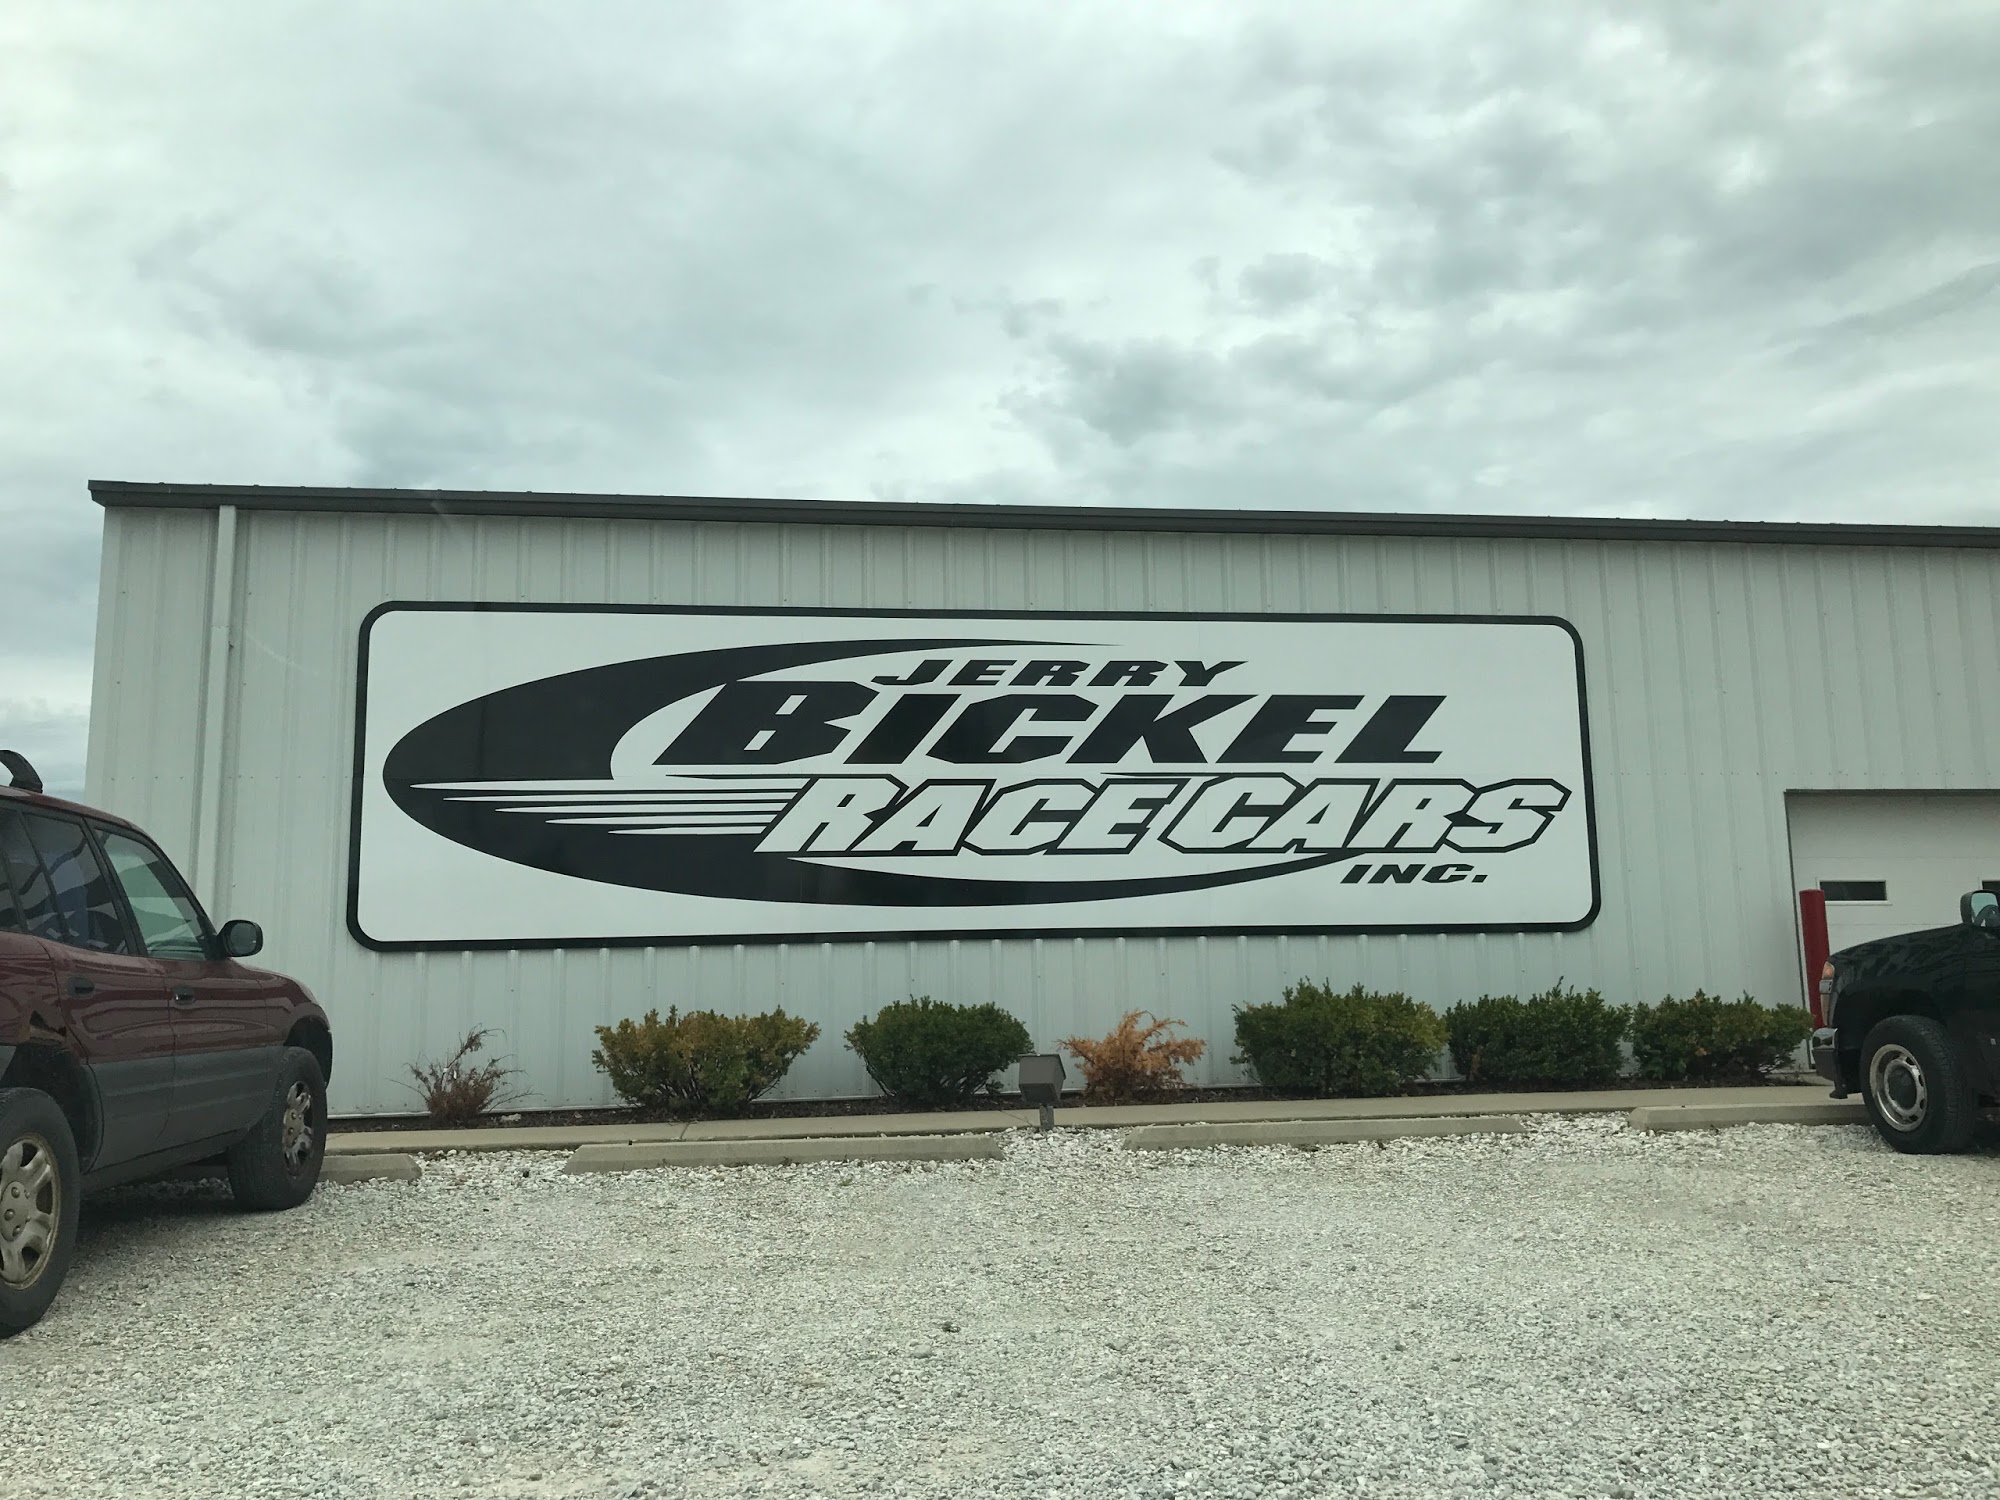 Jerry Bickel Race Car Inc